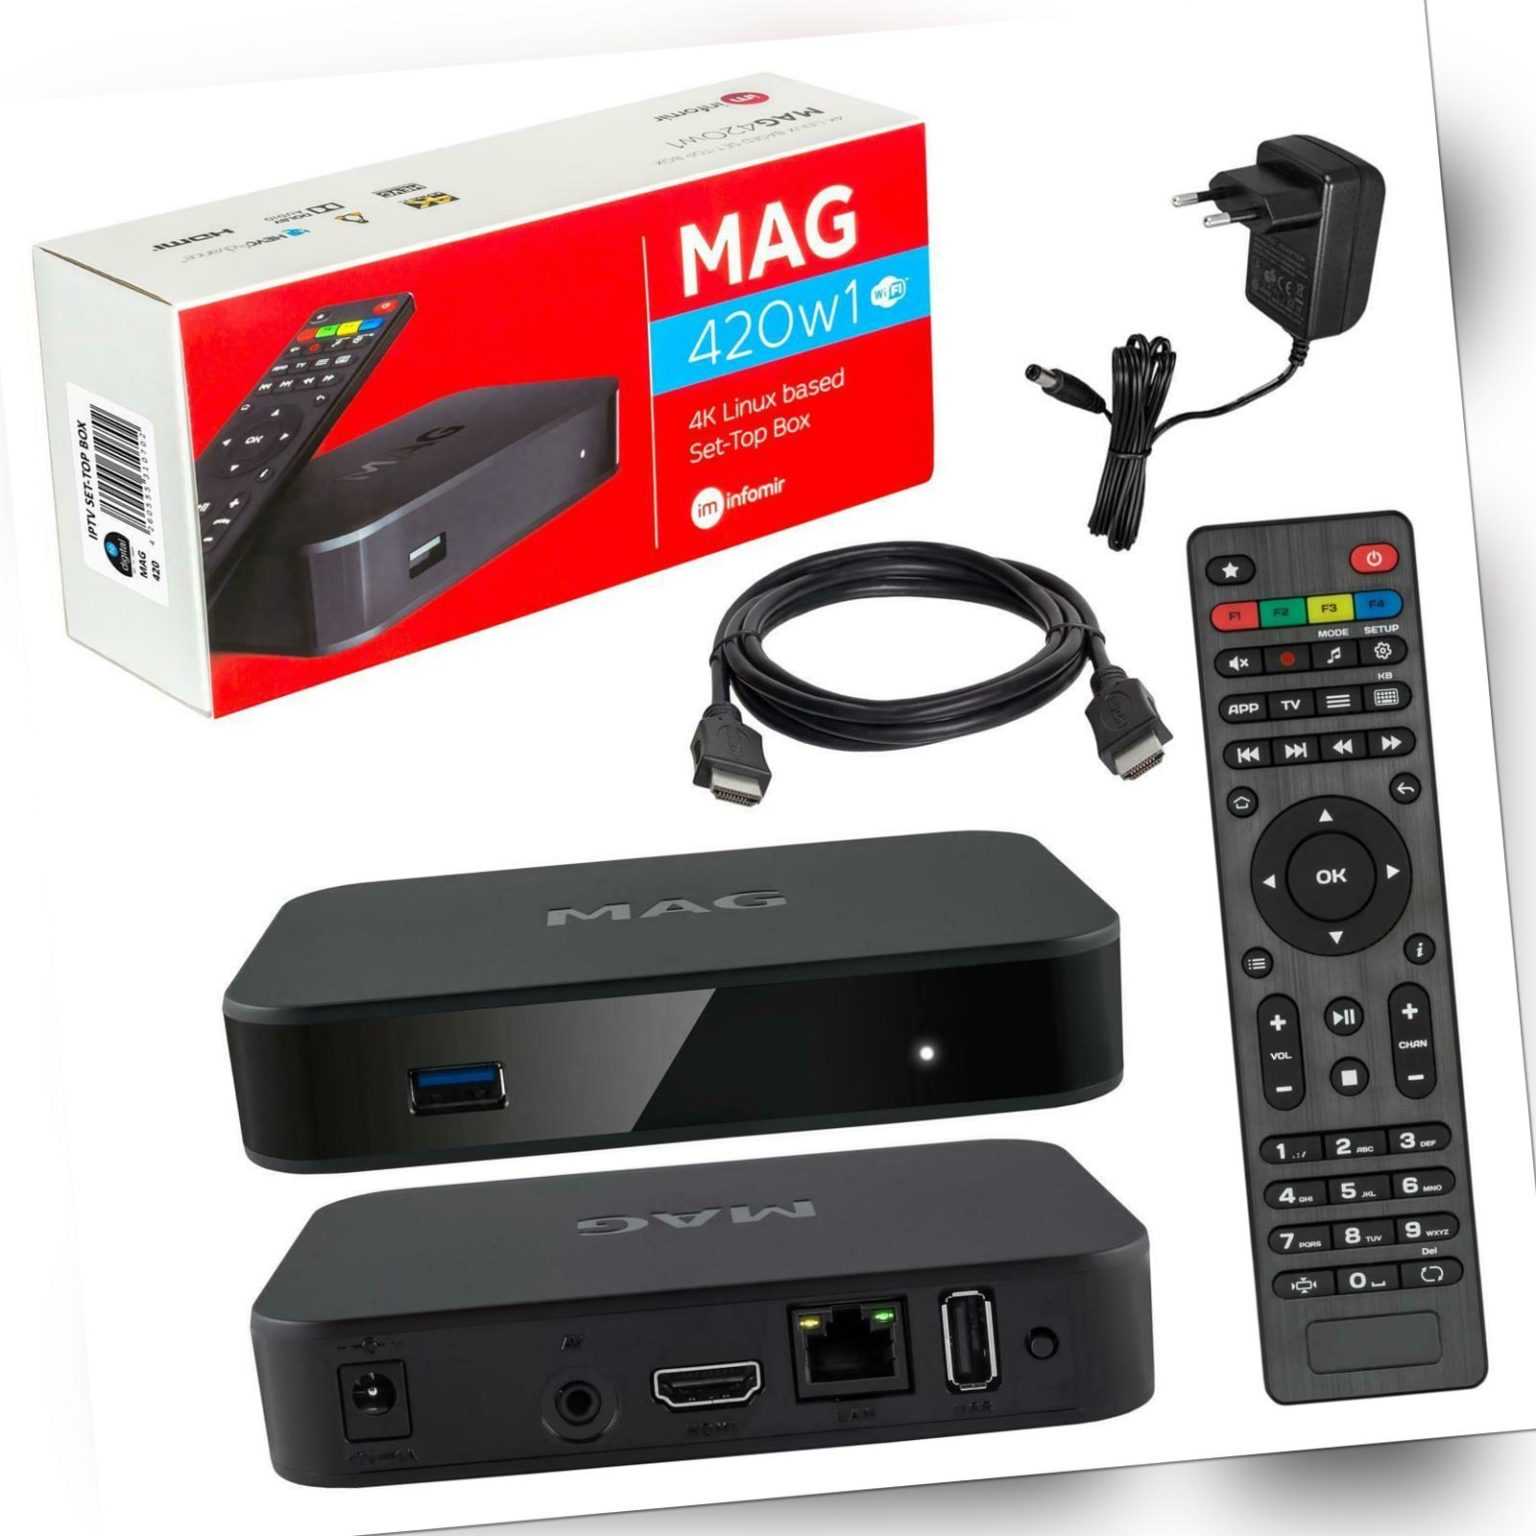 MAG 420W1 IPTV HEVC H.265 4K HDMI WiFi WLAN UHD 60FPS Linux USB LAN Internet TV